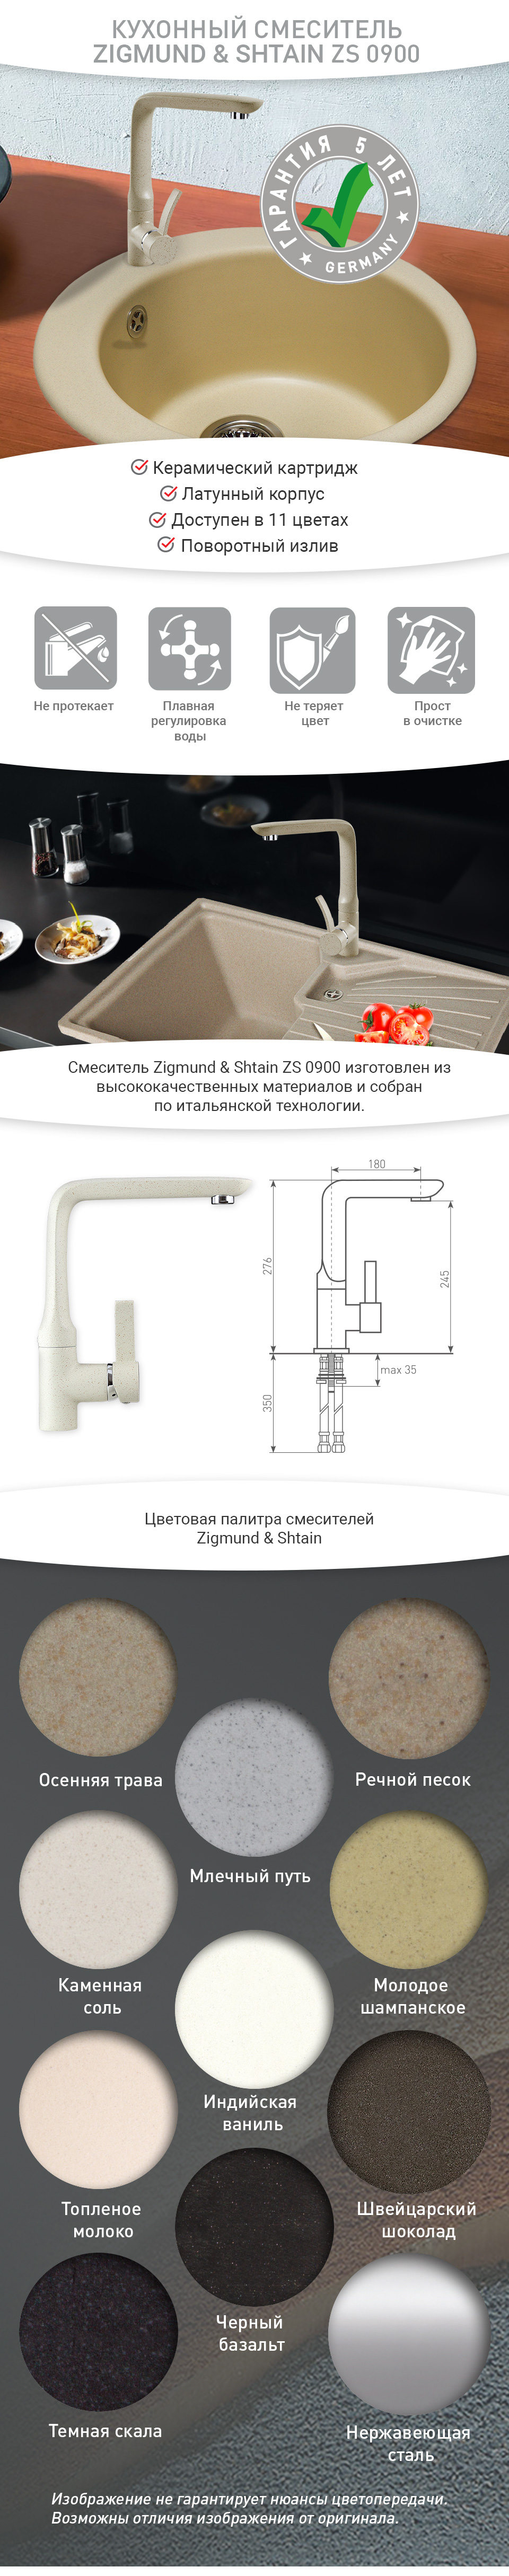 Смеситель Zigmund & Shtain ZS 0900 Топленое молоко